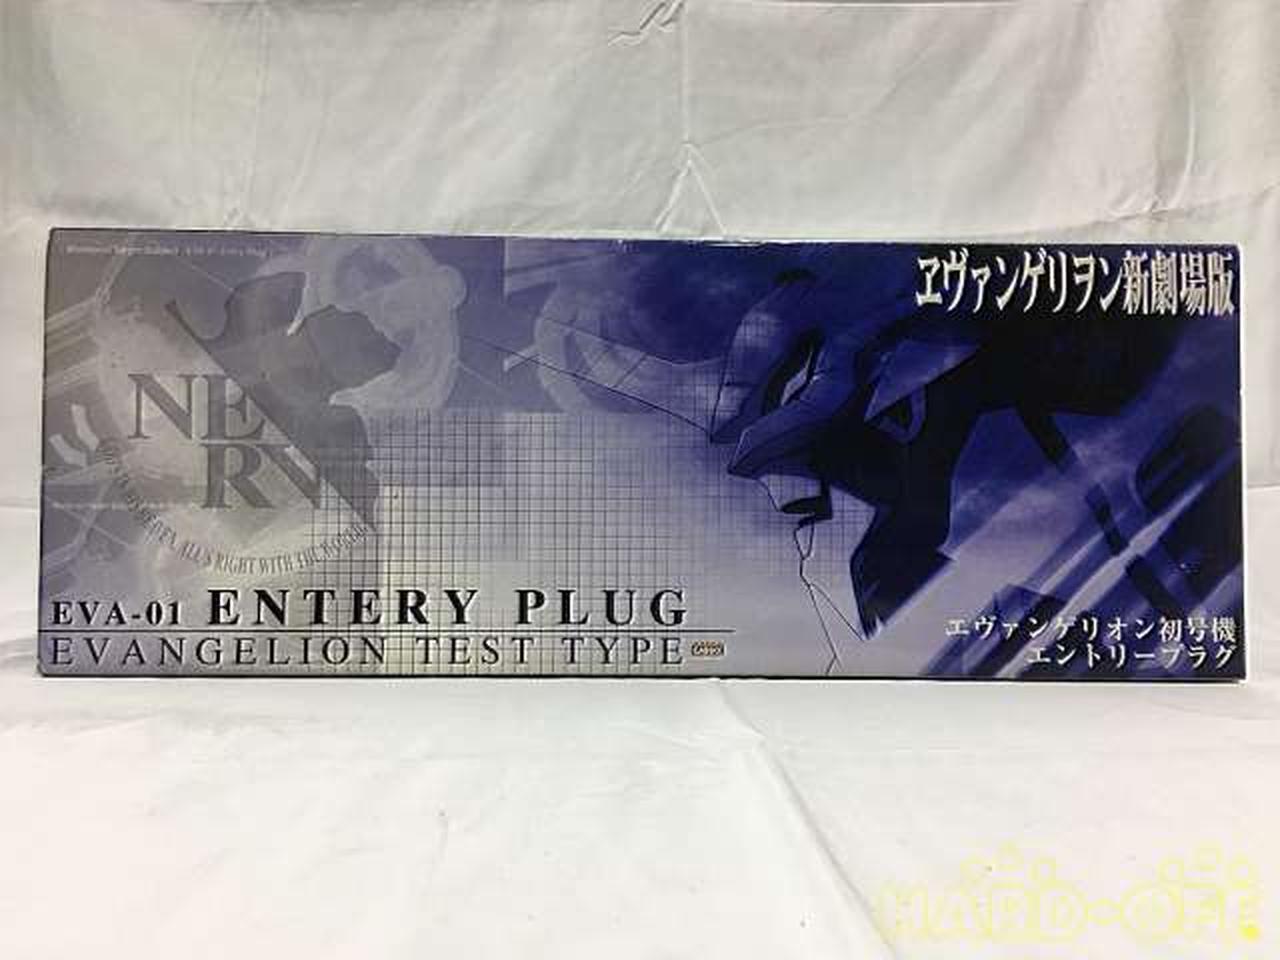 Aoshima/Skynet Evangeliontheatrical Version First Model Entry Plug